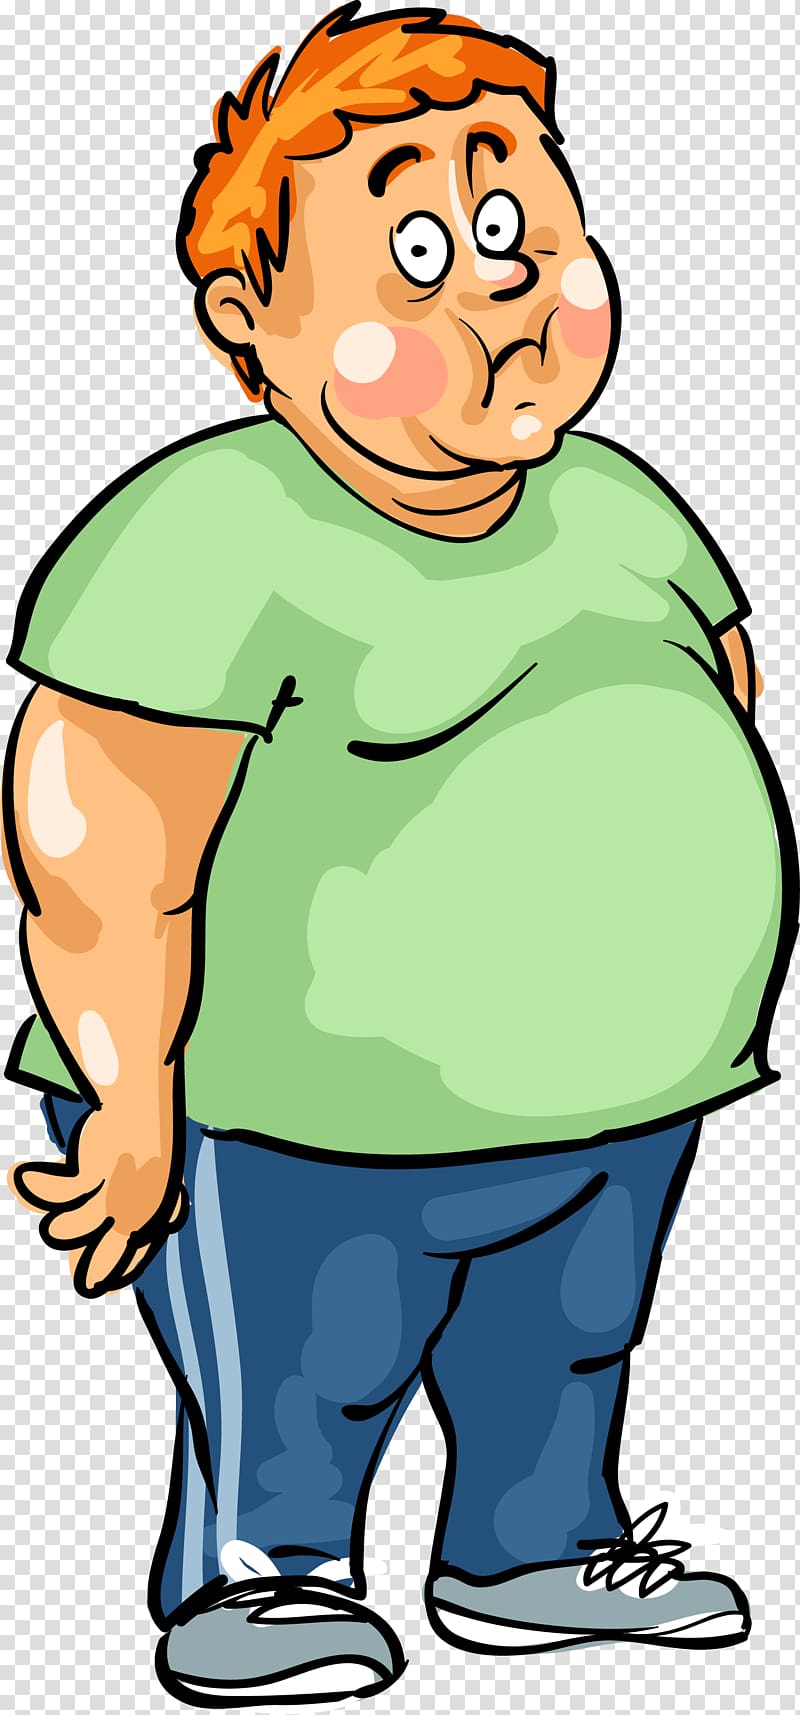 Male cartoon character illustration, Man Male Fat, A fat man.